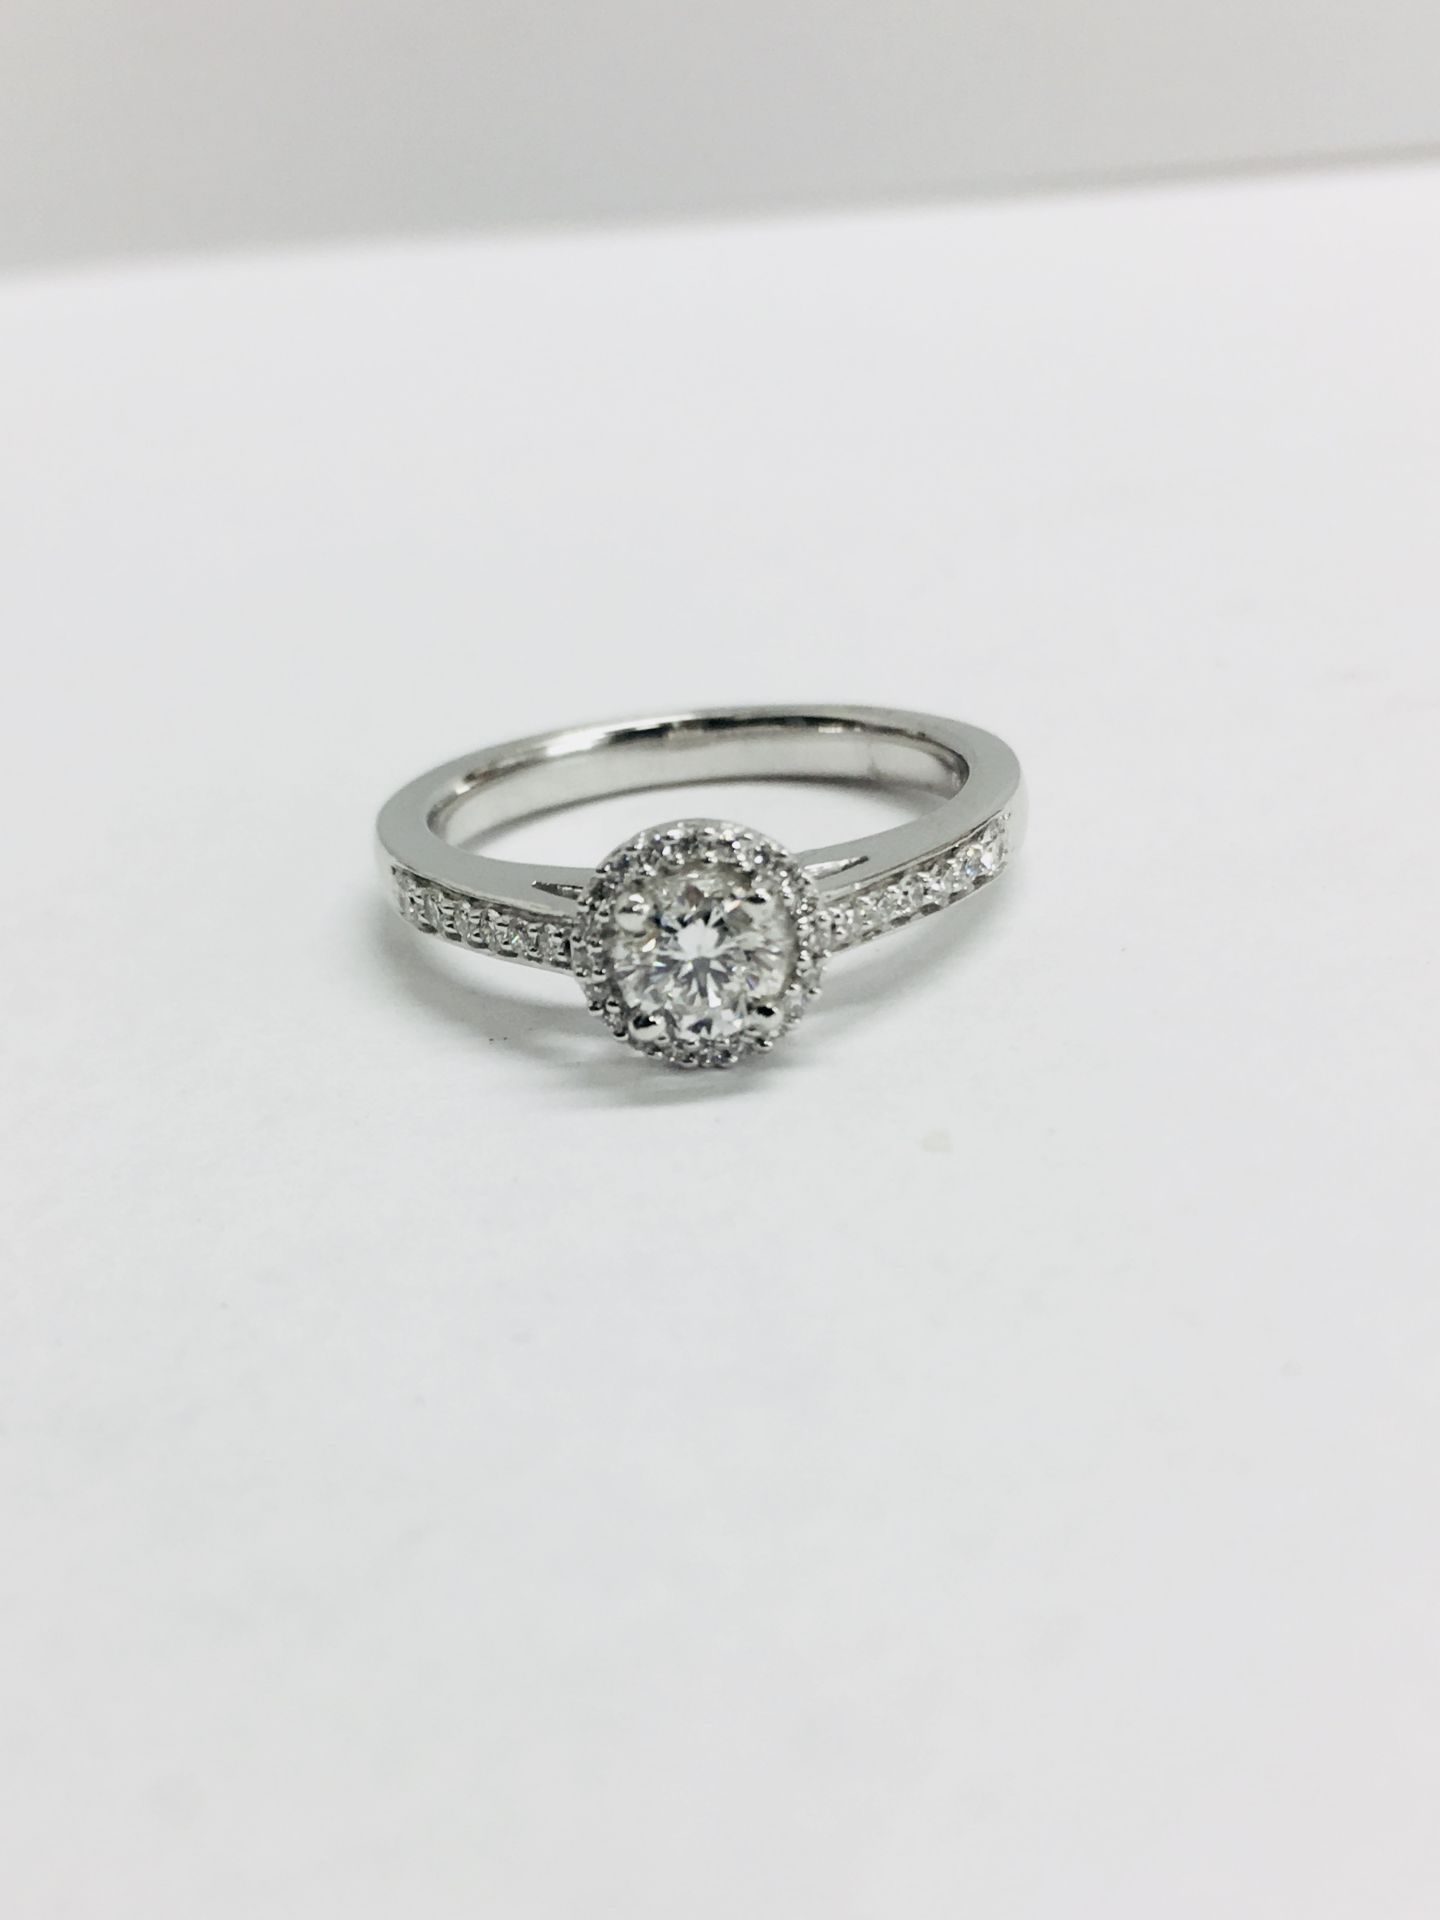 18ct white gold Halo style solitaire ring,0.30ct natural diamond,0.28ct h Colour si diamonds